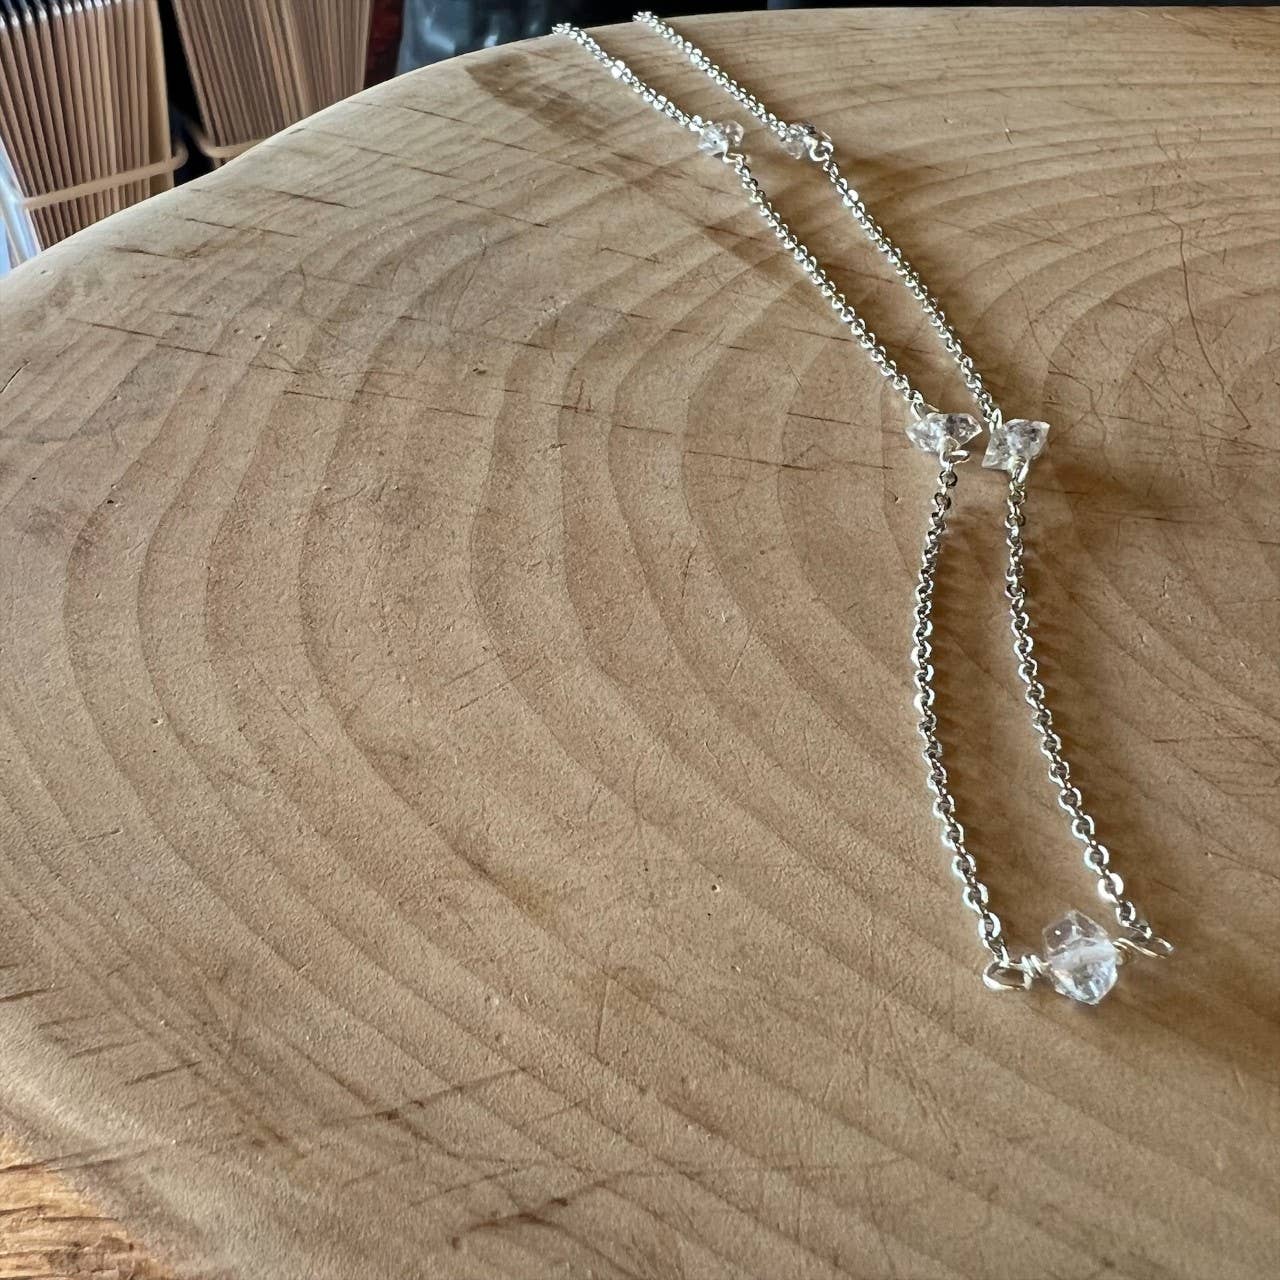 Forest & Fog | Herkimer Diamond Necklace